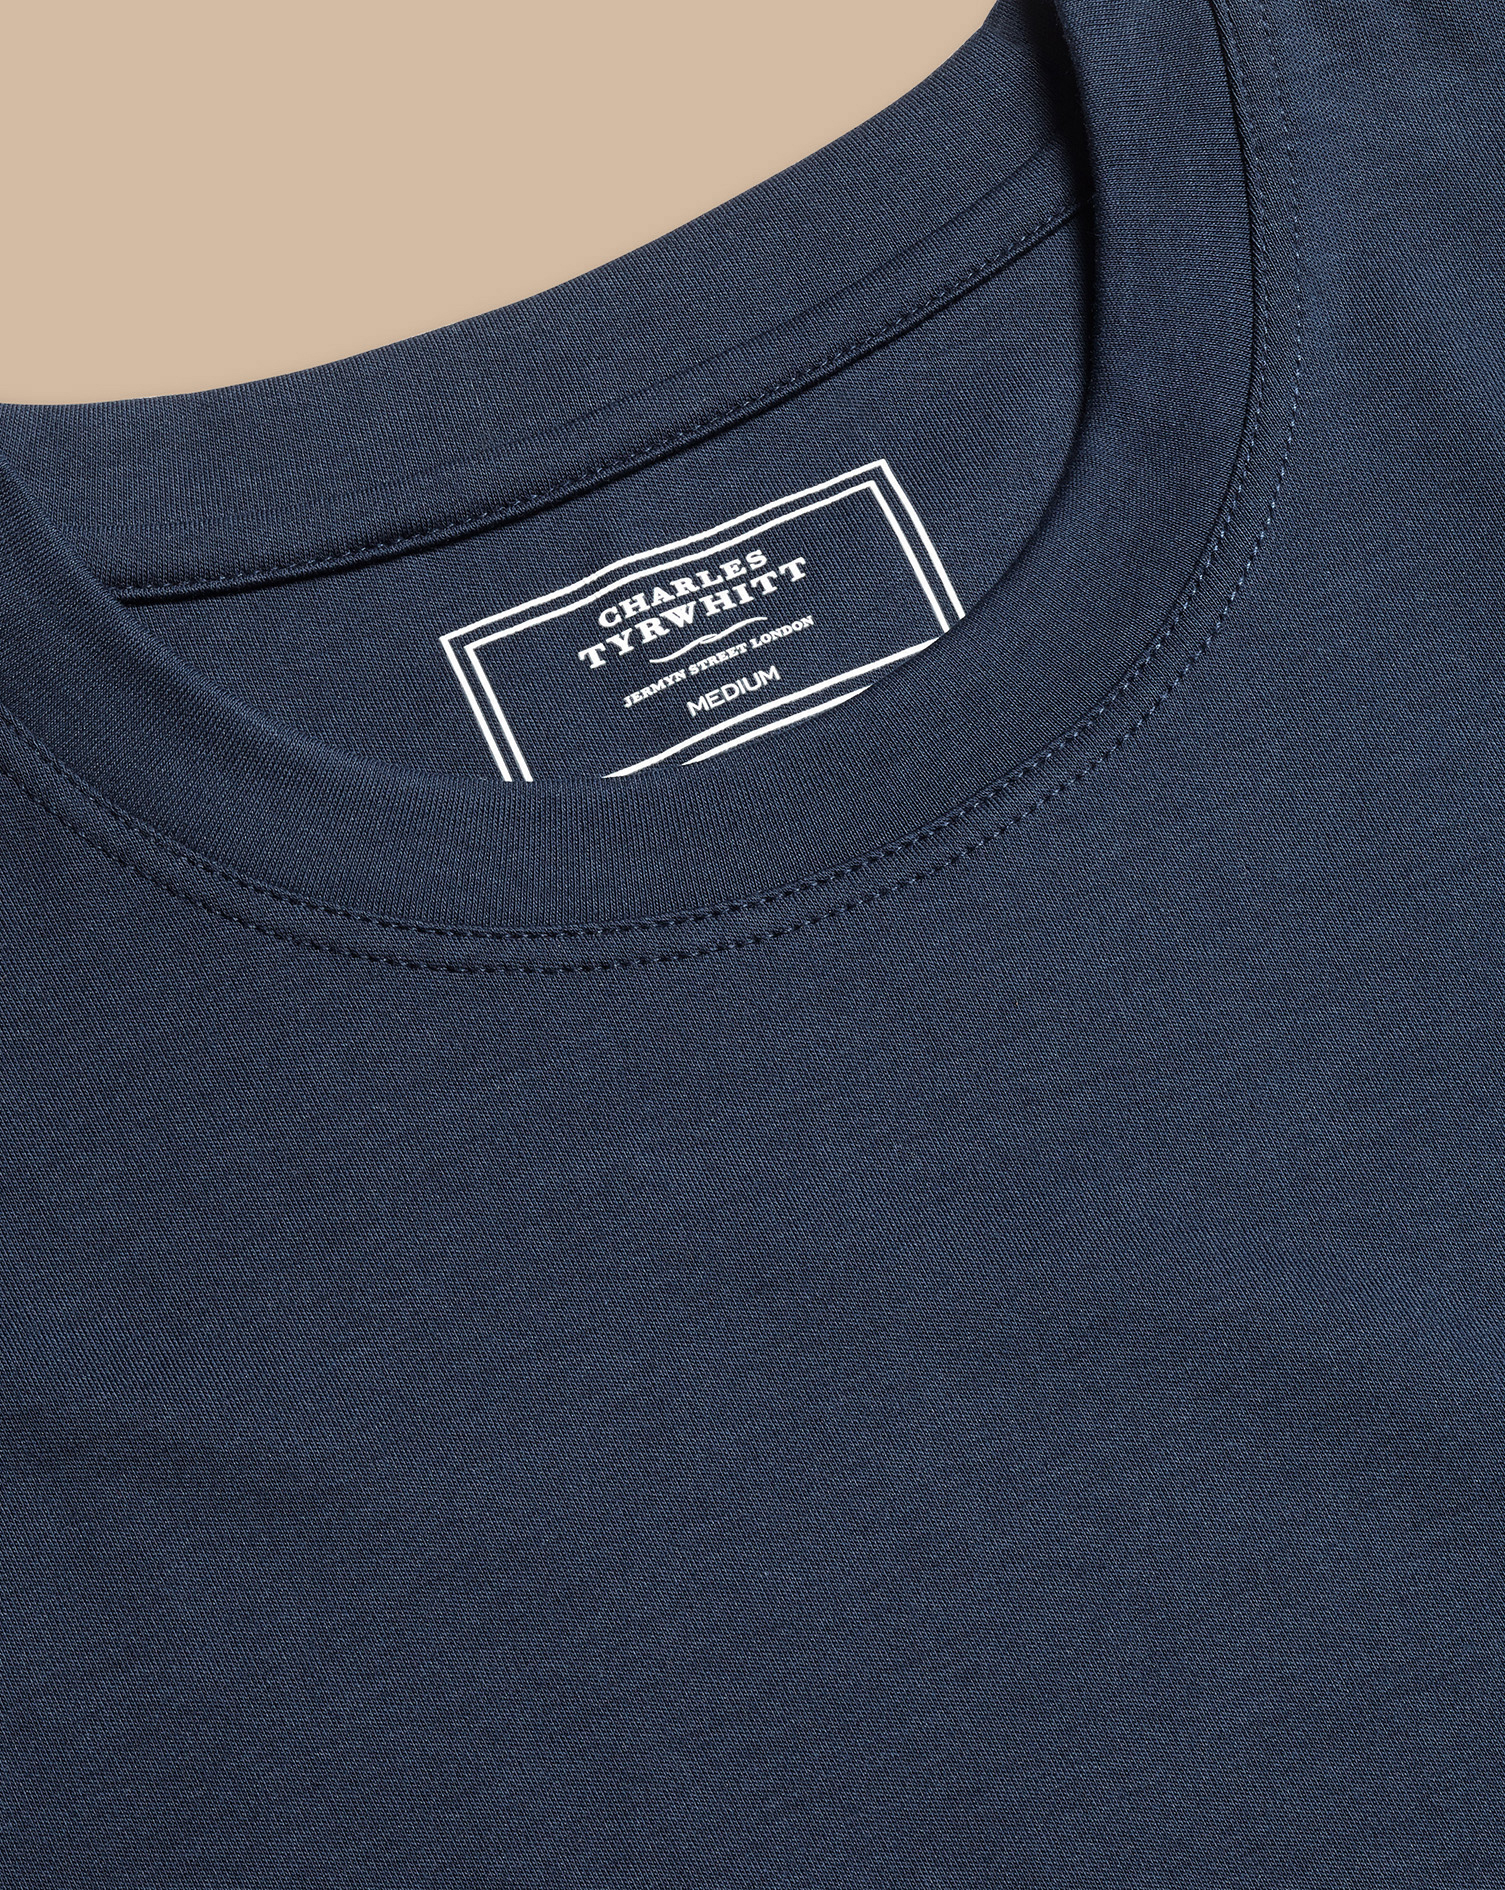 Men's Charles Tyrwhitt T-Shirt - Navy Blue Size Small Cotton
